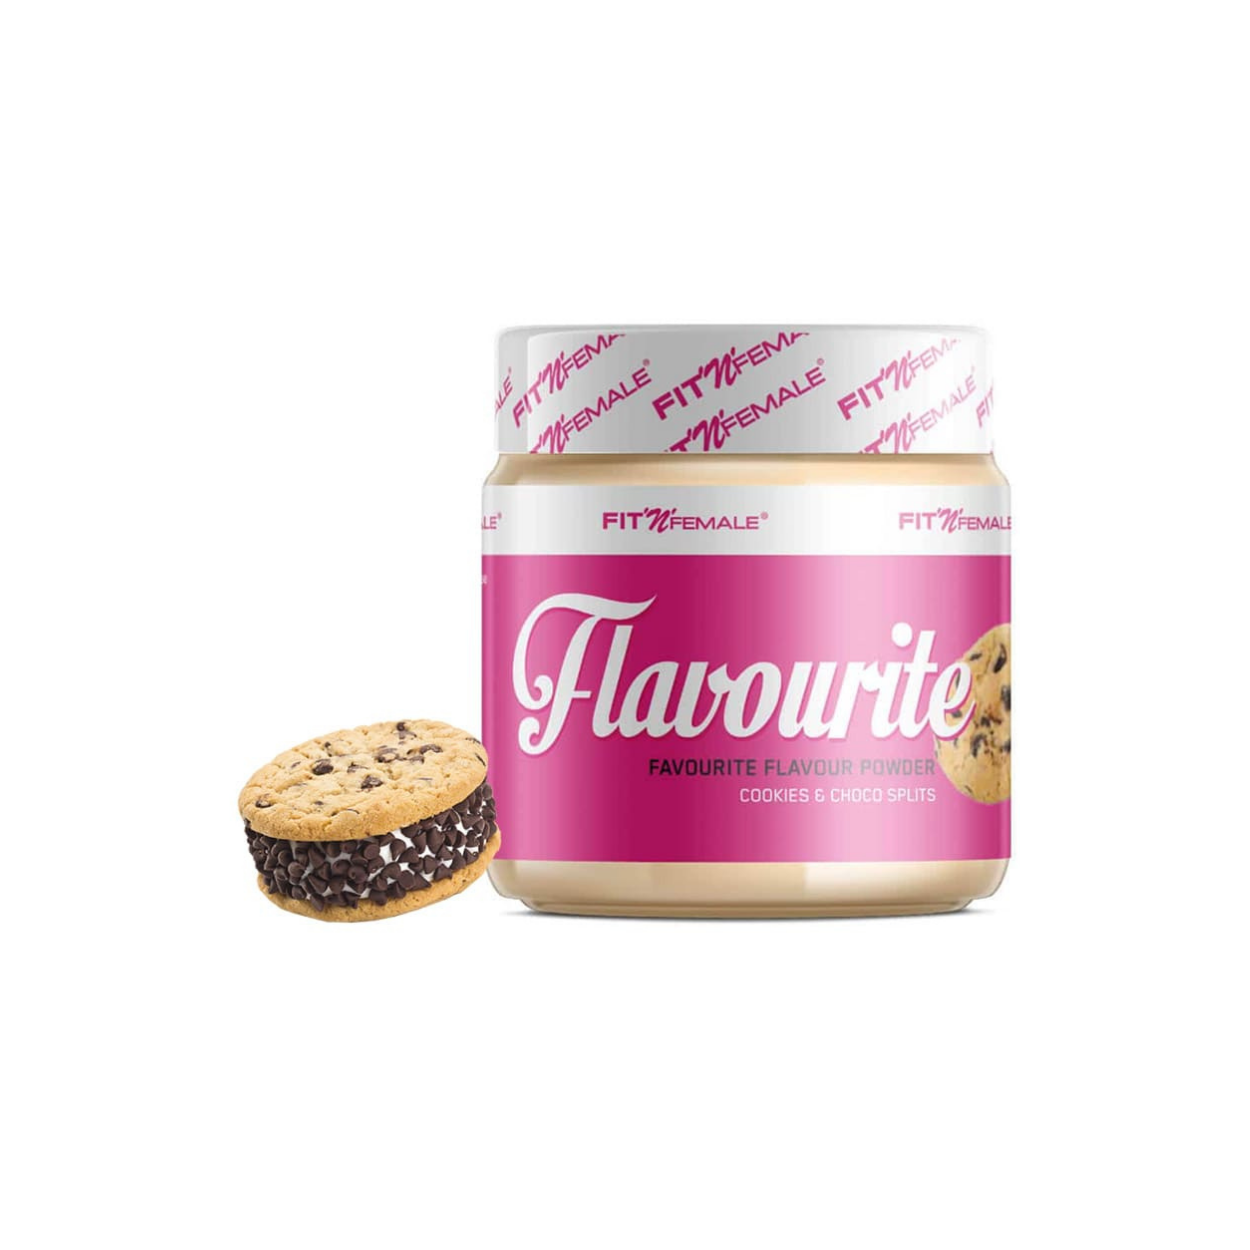 Fit n Female Flavourite Cookies & Cream + Choco Splits (200g)